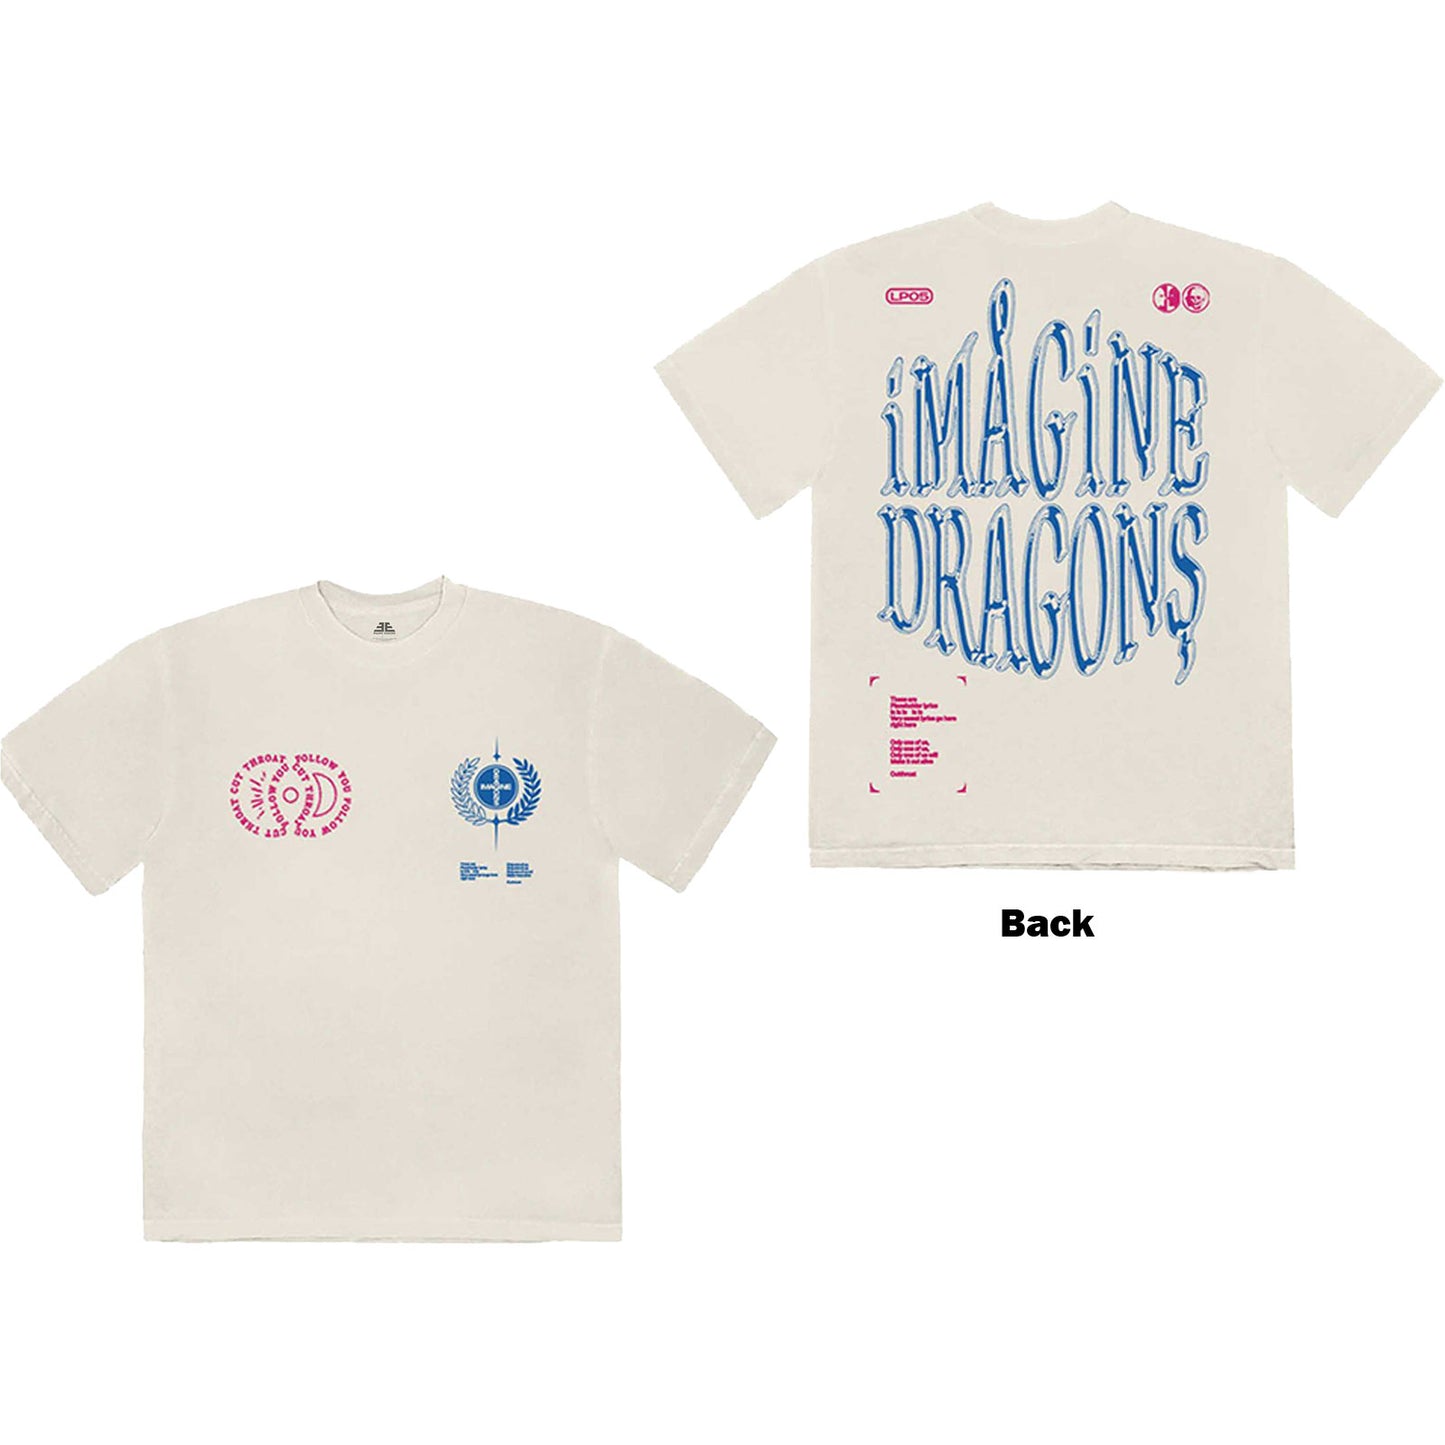 Imagine Dragons T-Shirt: Lyrics